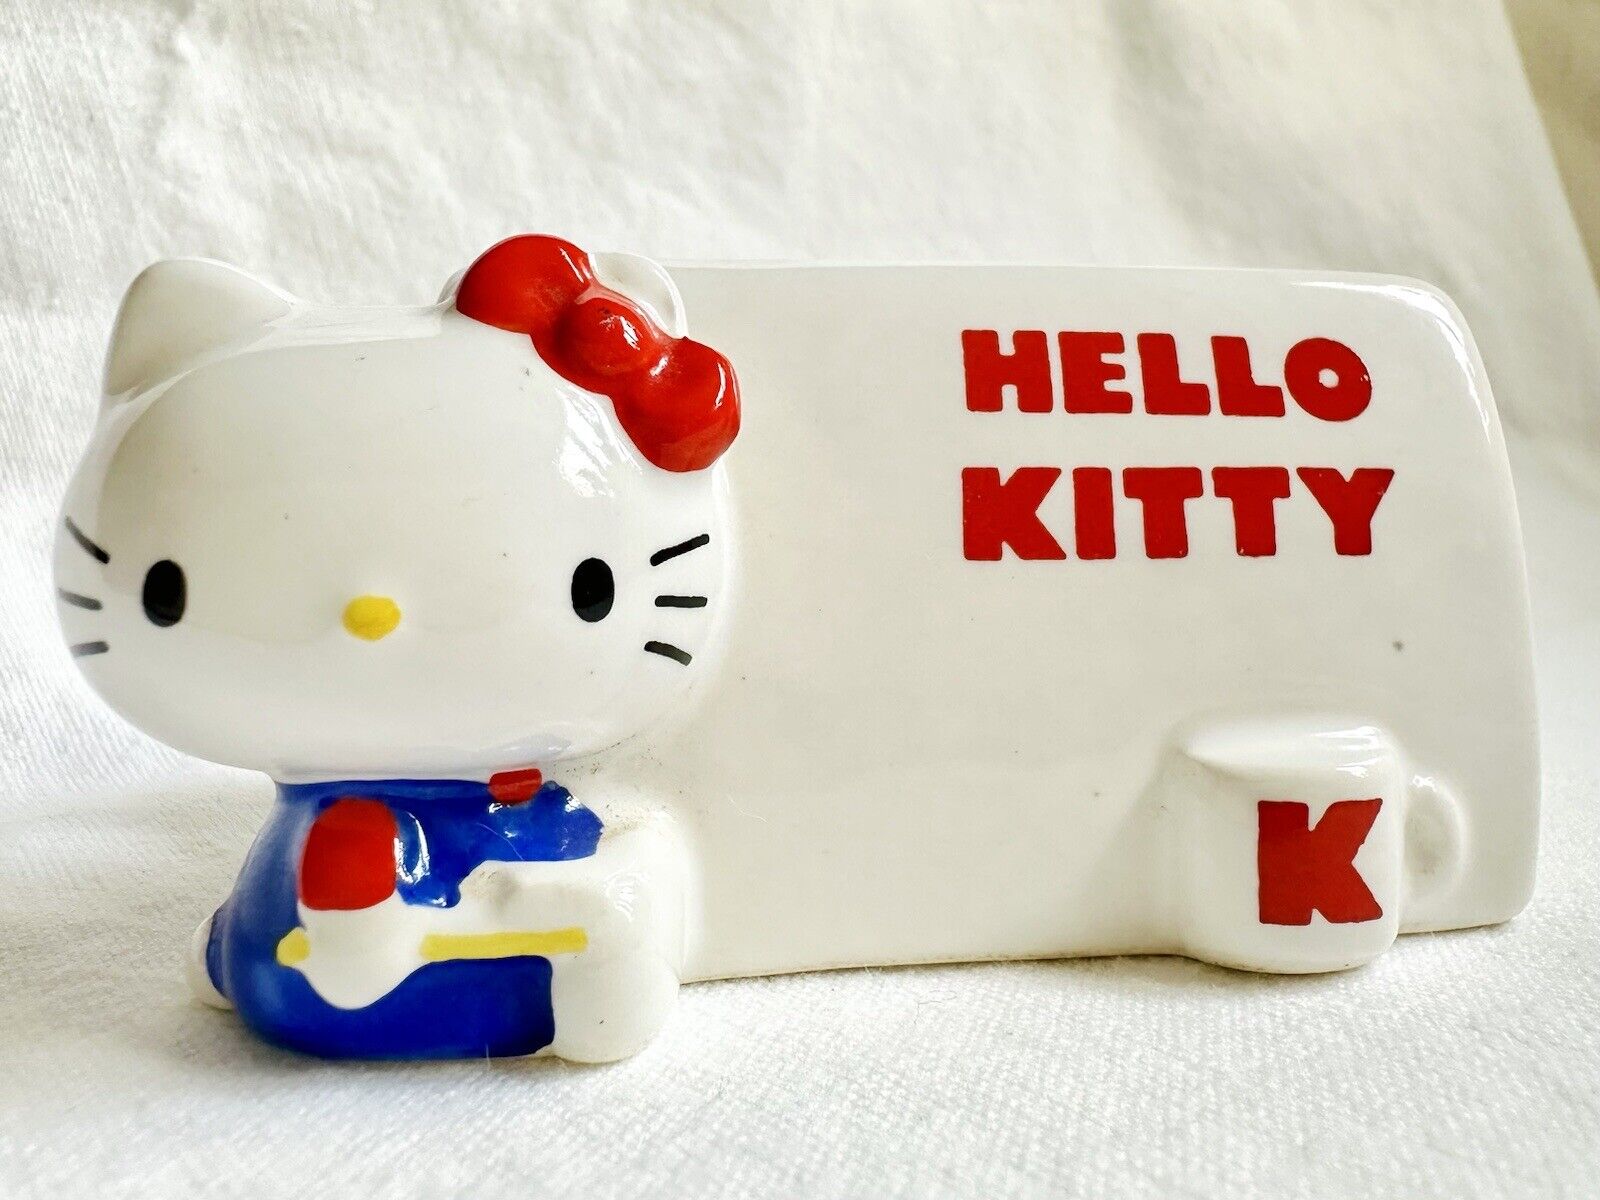 Extremely RARE Vintage Sanrio Hello Kitty Ceramic Toothpaste Squeezer 1976Japan